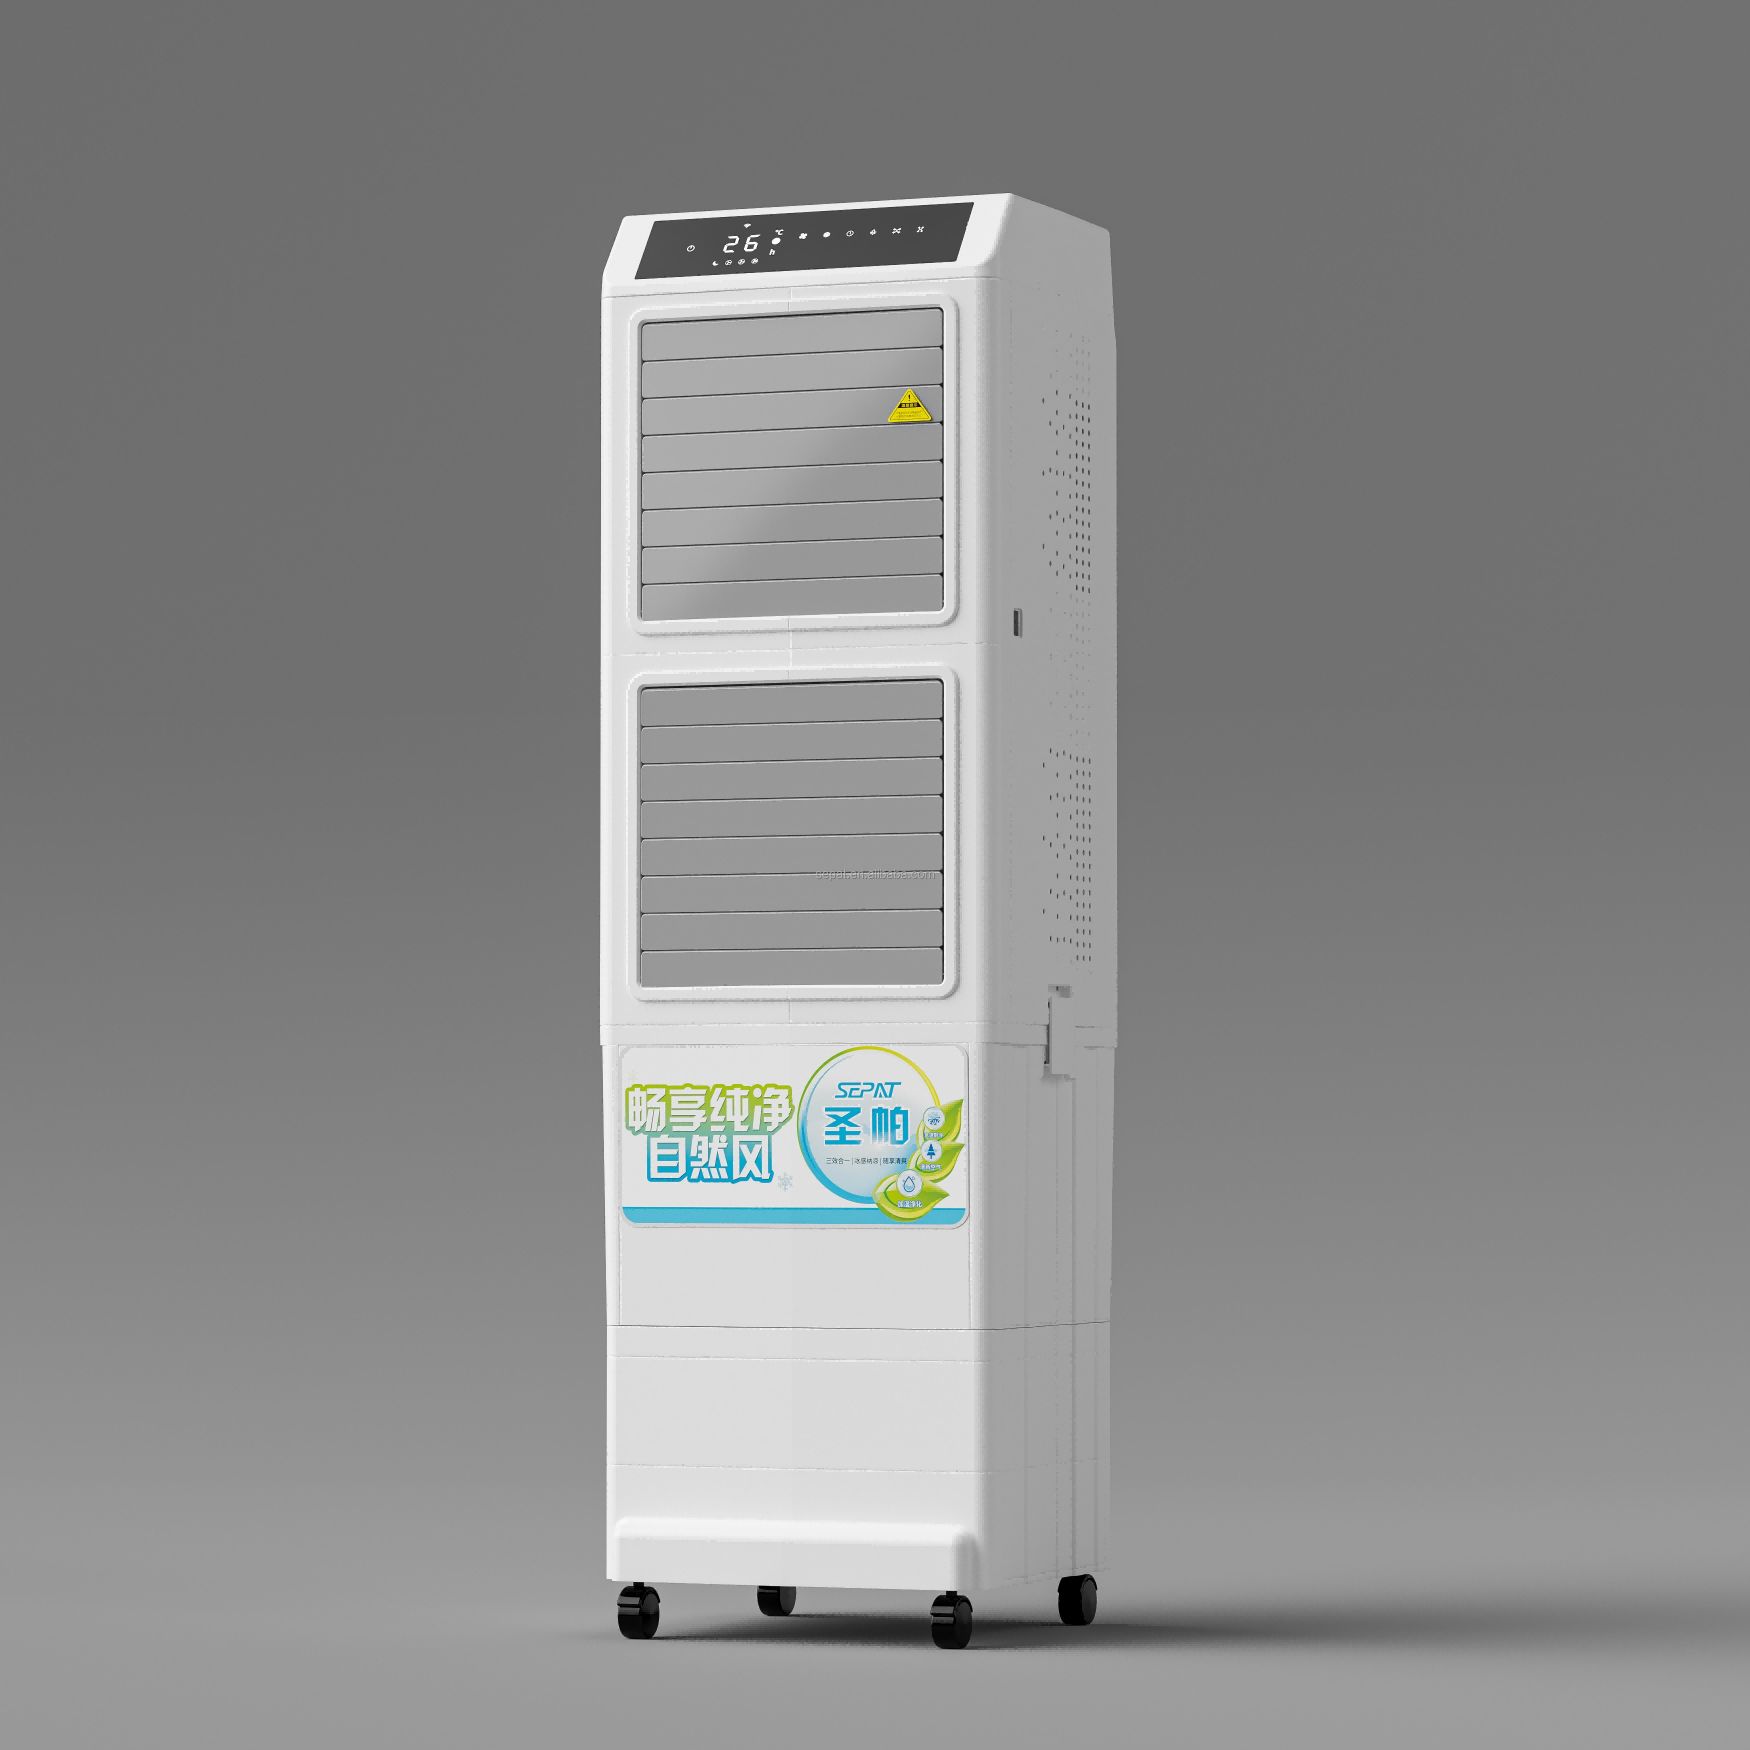 SEPAT High Quality Air Cooler